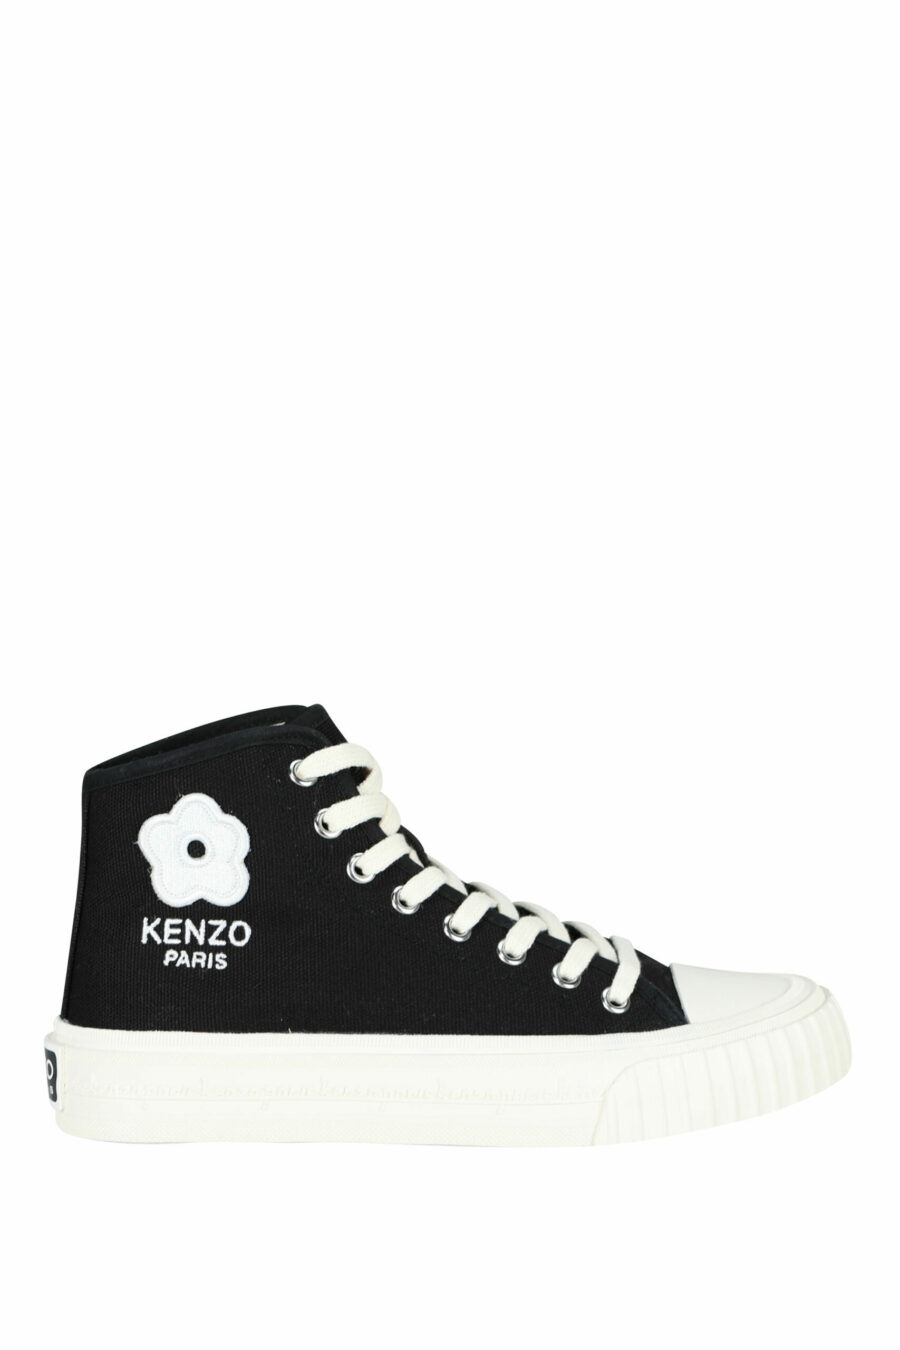 Baskets montantes noires "kenzo foxy" avec logo "boke flower" blanc - 3612230639515 échelle